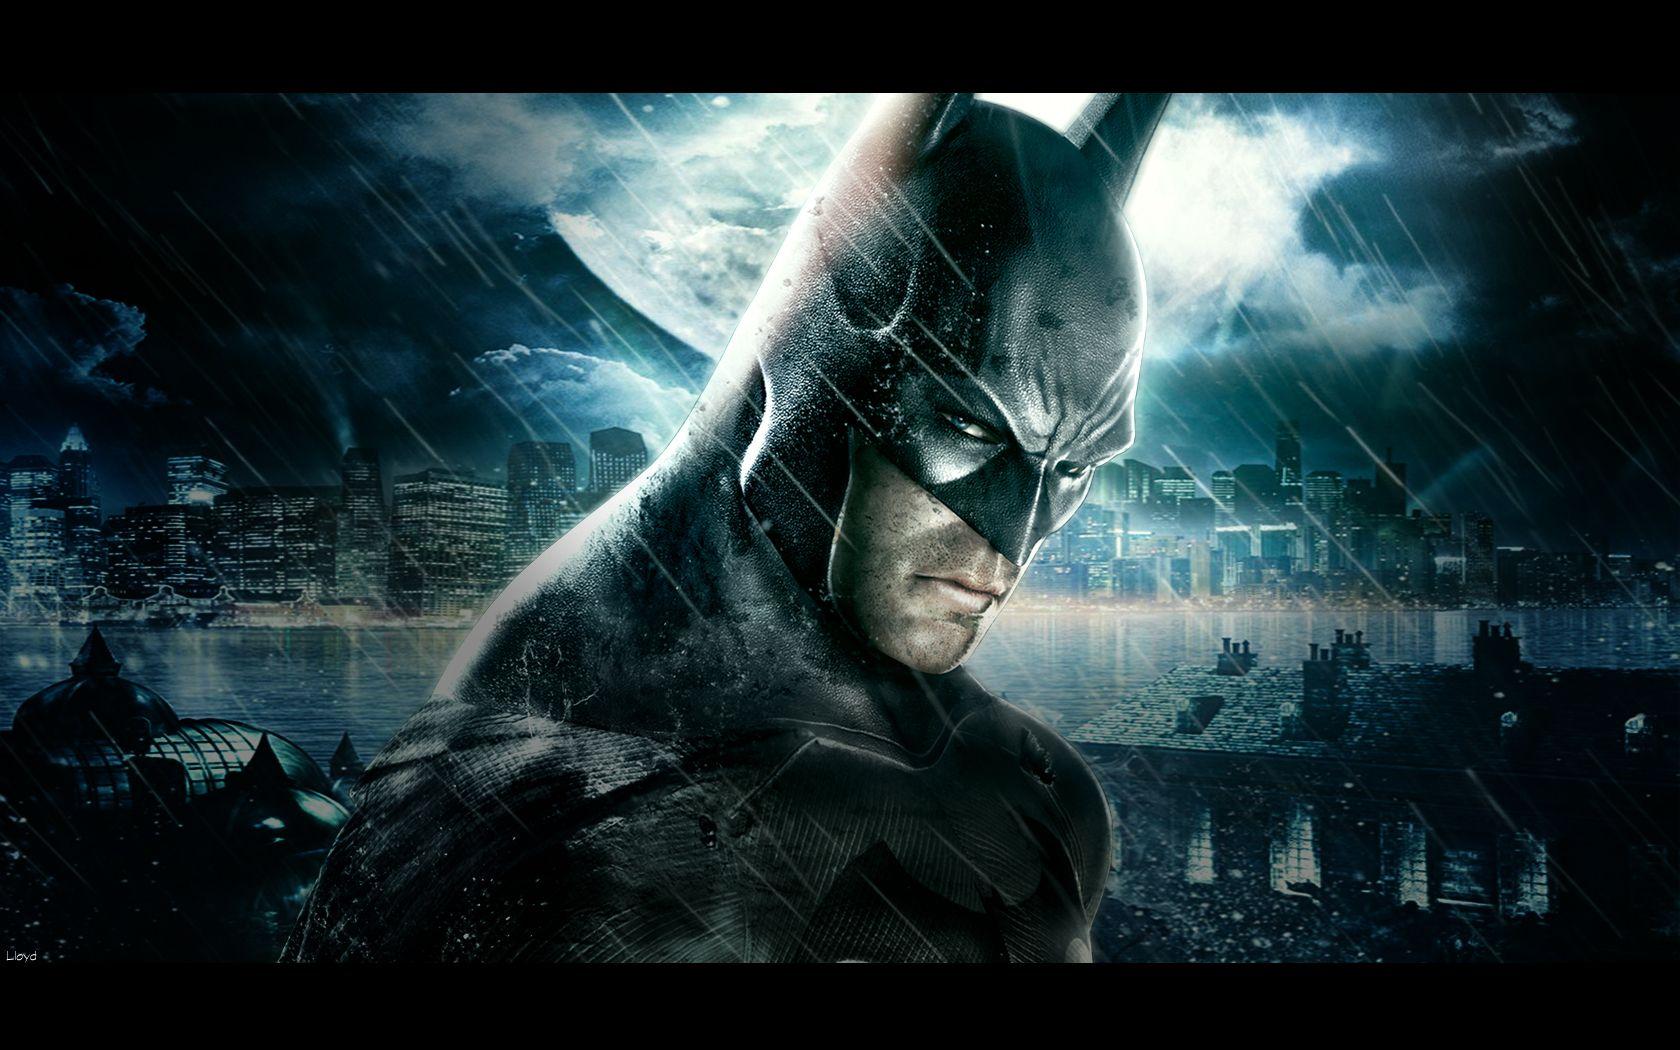 Batman in Batman: Arkham Asylum wallpaper - Game wallpapers - #54400